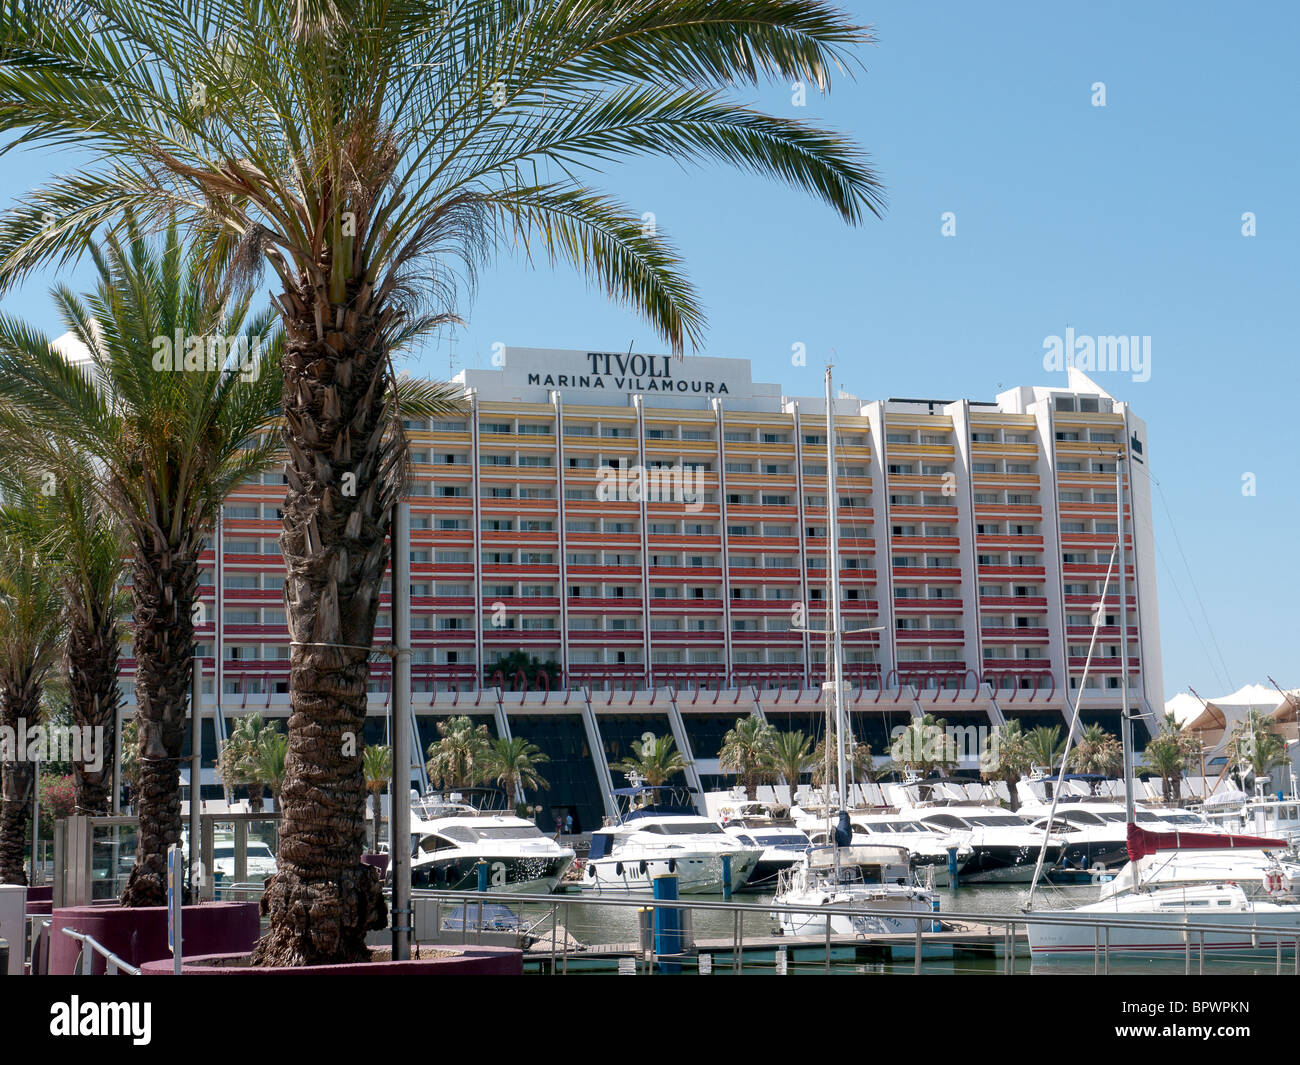 Tivoi Hotel in Vilamoura marina, Vilamoura, Algarve, Portugal Stock Photo